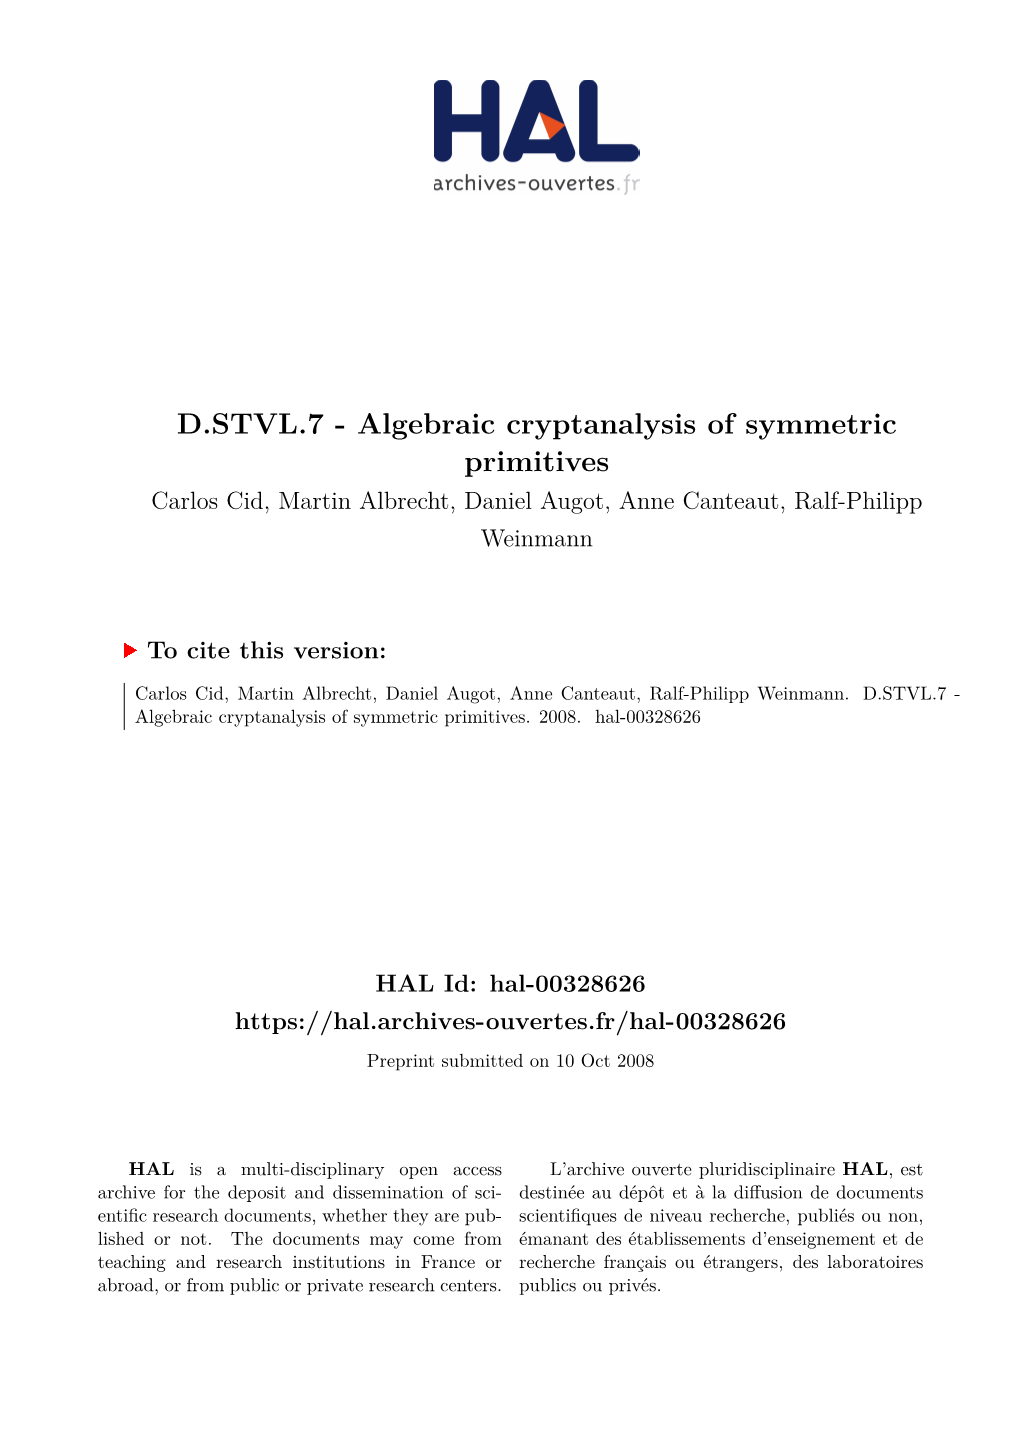 Algebraic Cryptanalysis of Symmetric Primitives Carlos Cid, Martin Albrecht, Daniel Augot, Anne Canteaut, Ralf-Philipp Weinmann